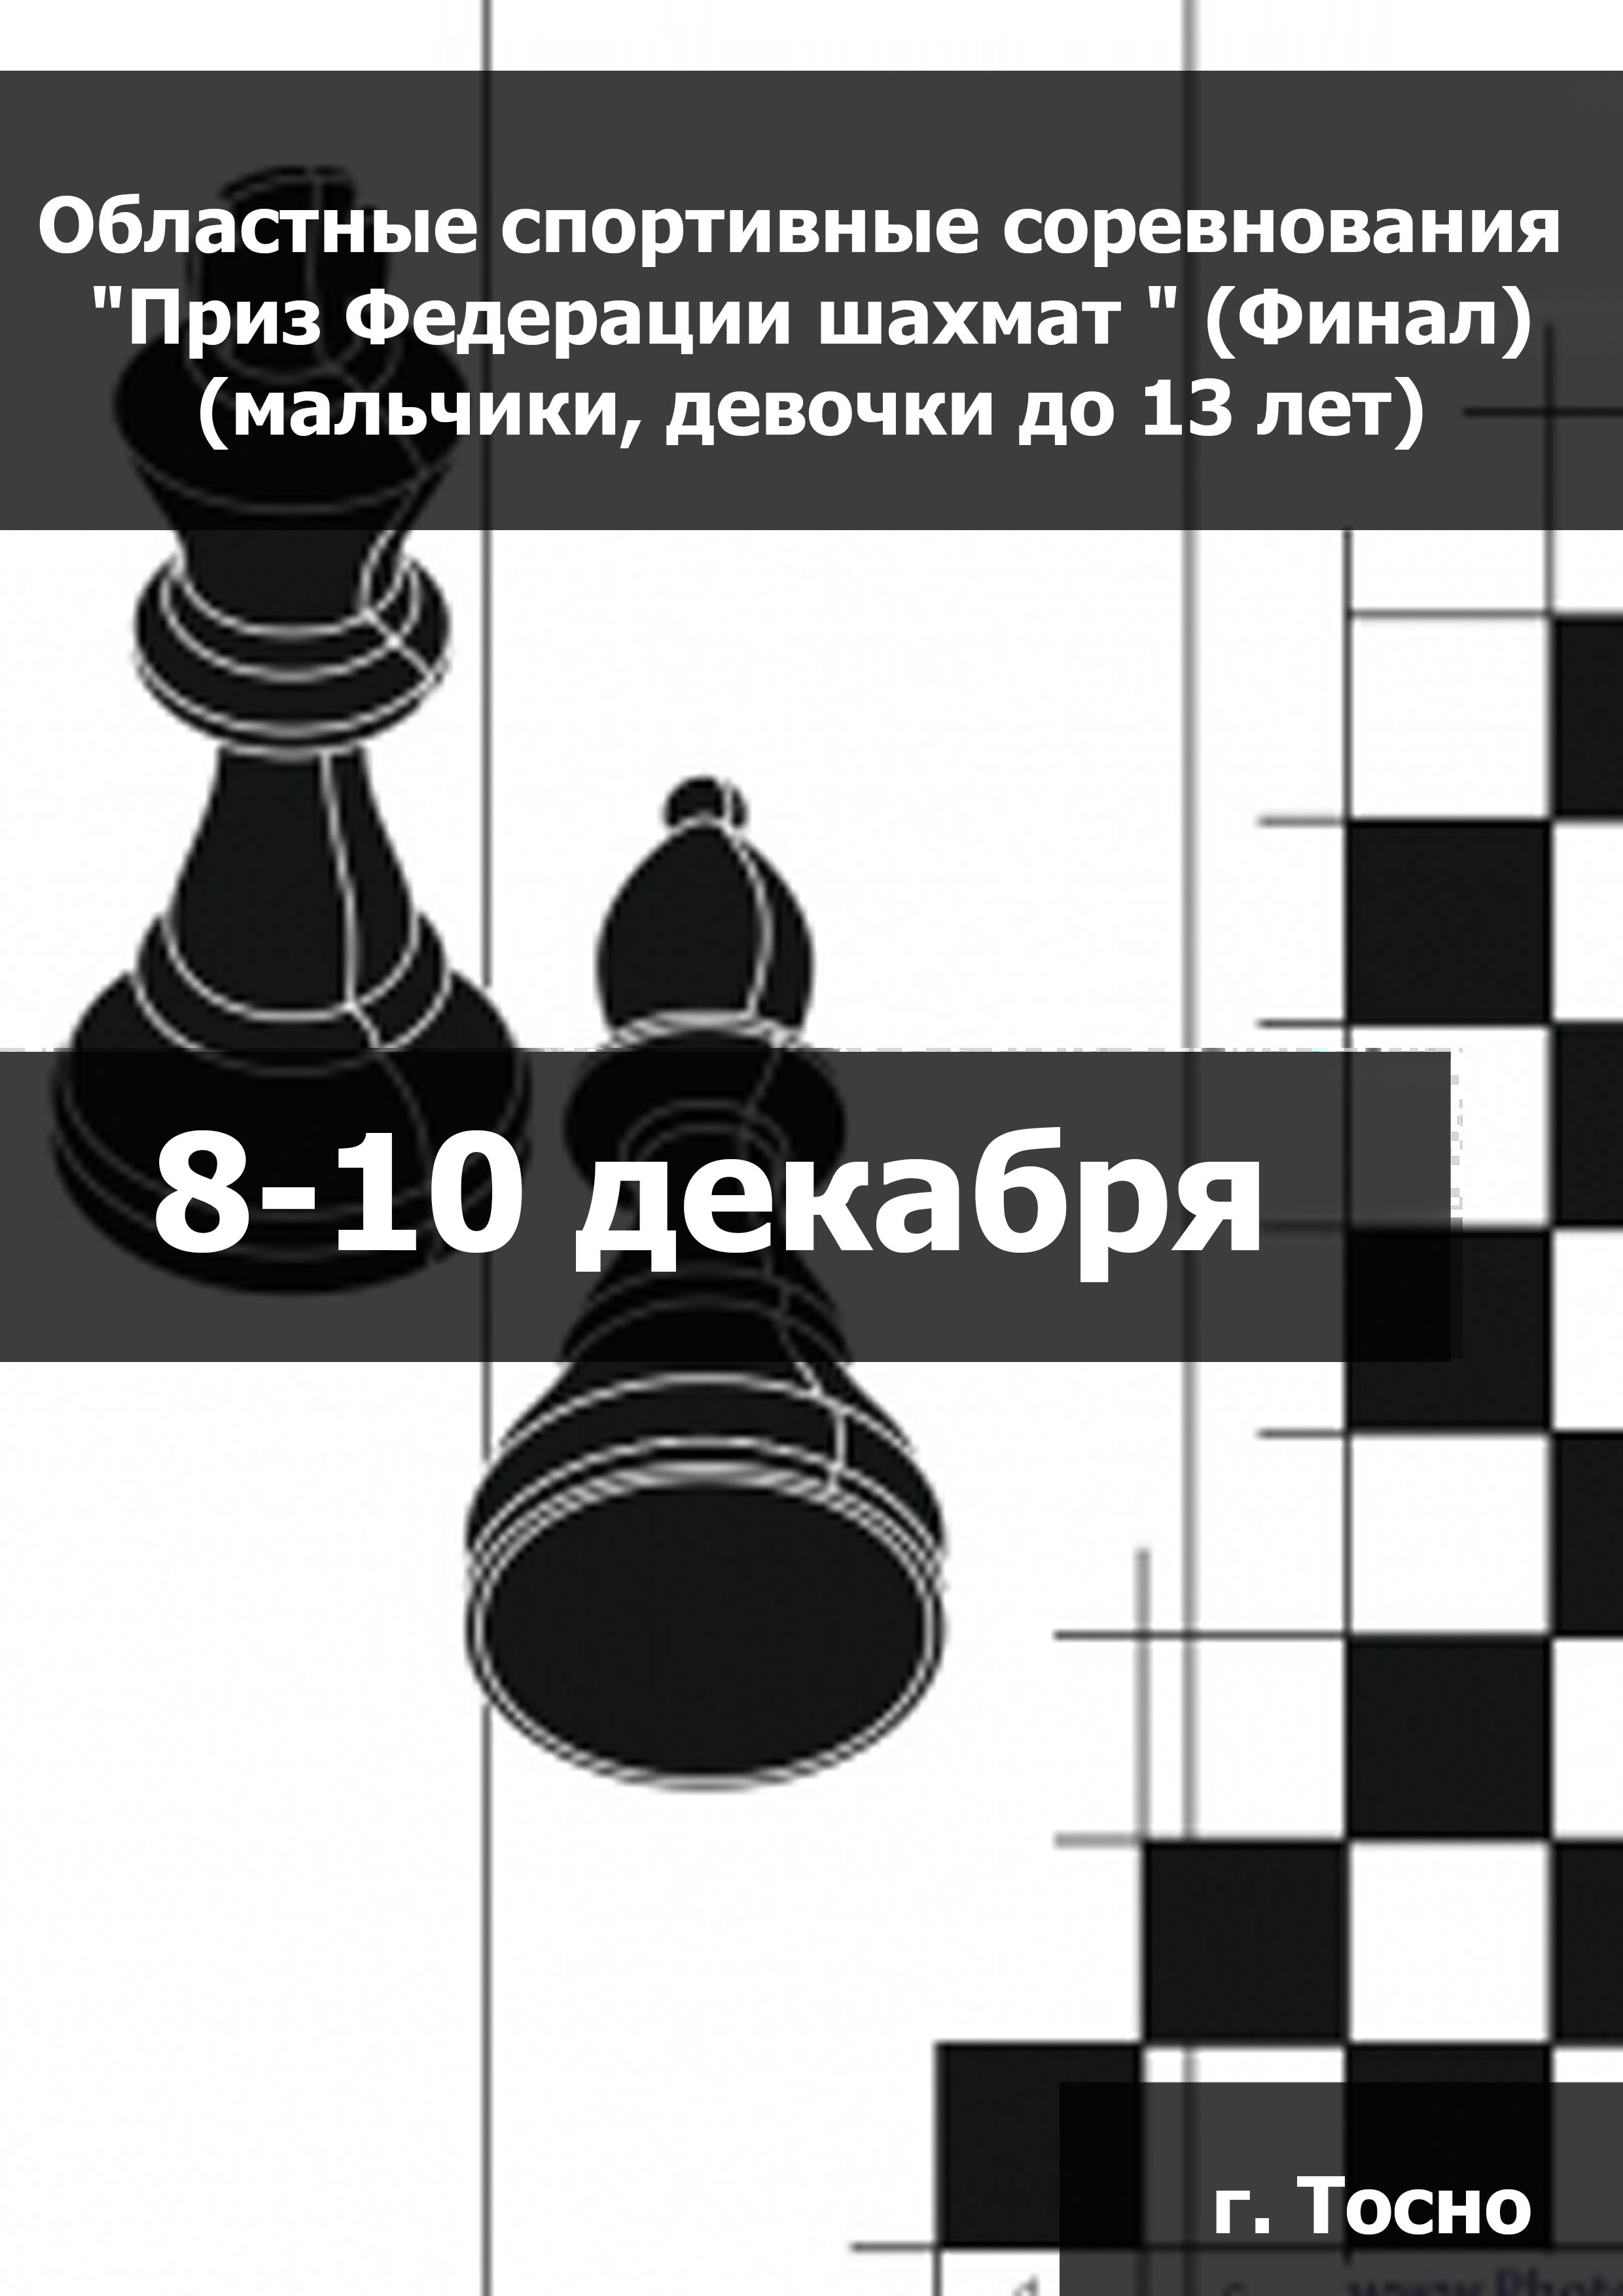 Областные спортивные соревнования "Приз Федерации шахмат " (Финал) (мальчики, девочки до 13 лет) 8  դեկտեմբերի
 2023  տարի
 